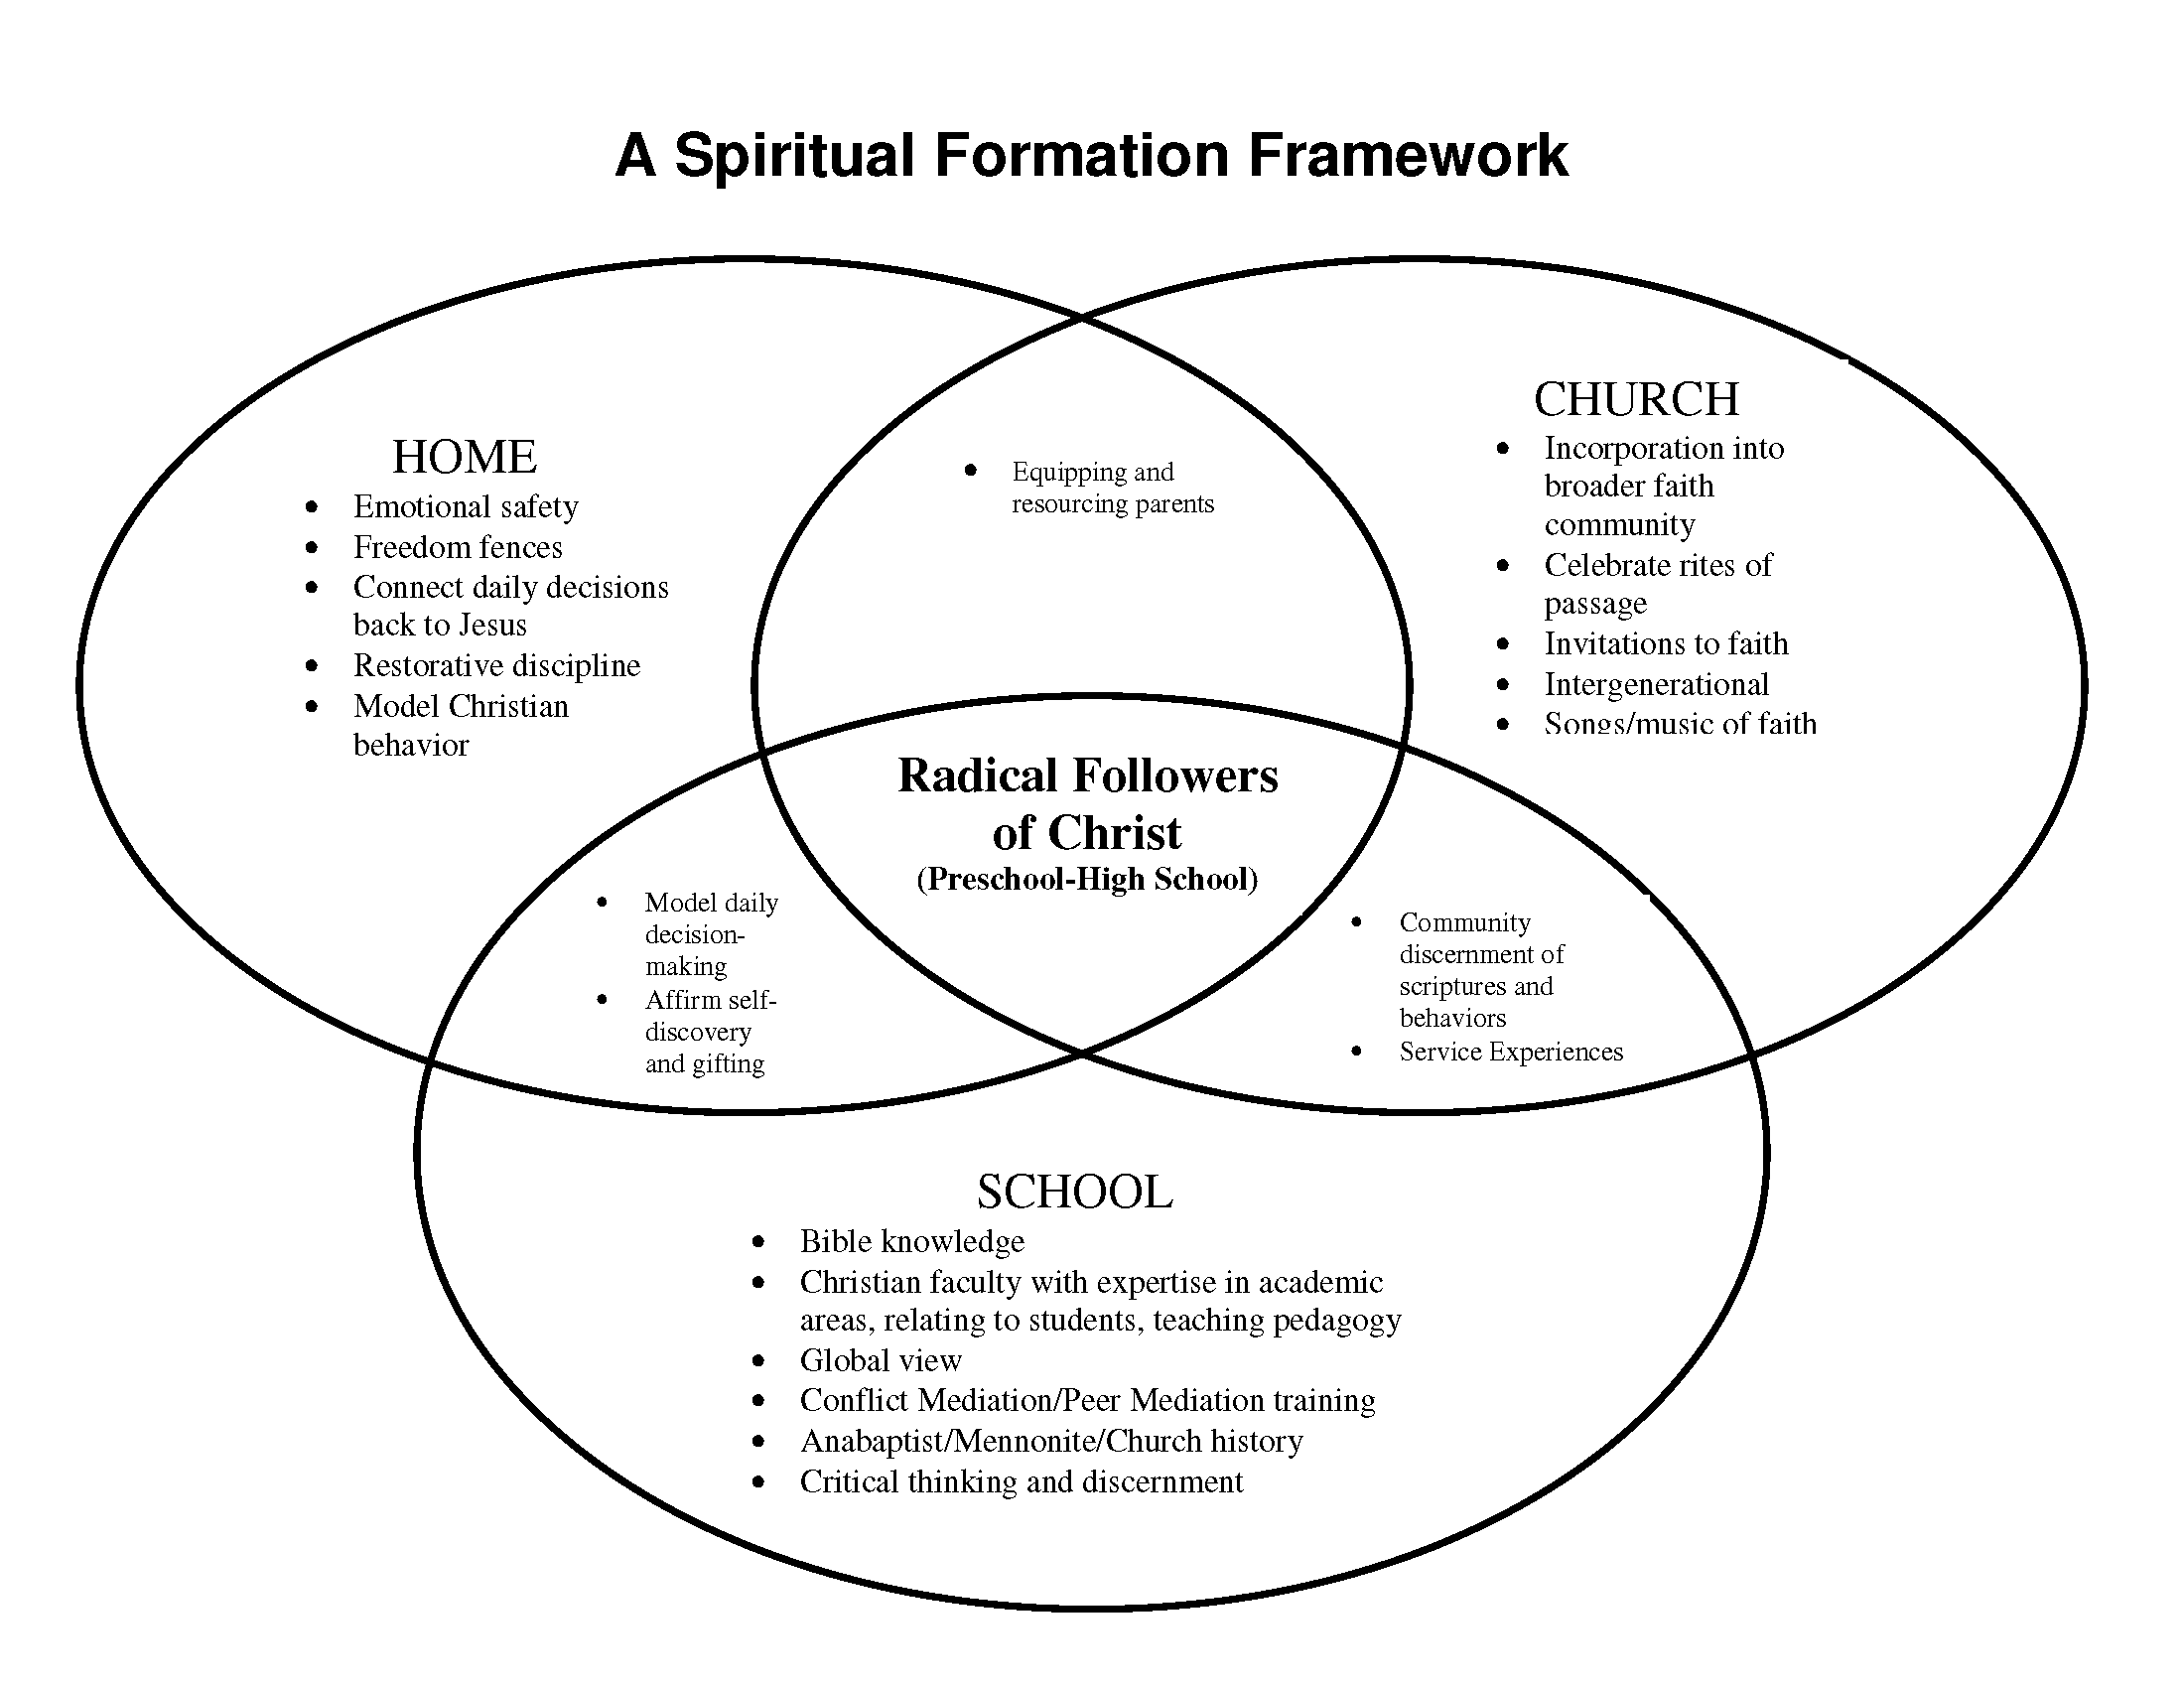 Spiritual Gifts Chart